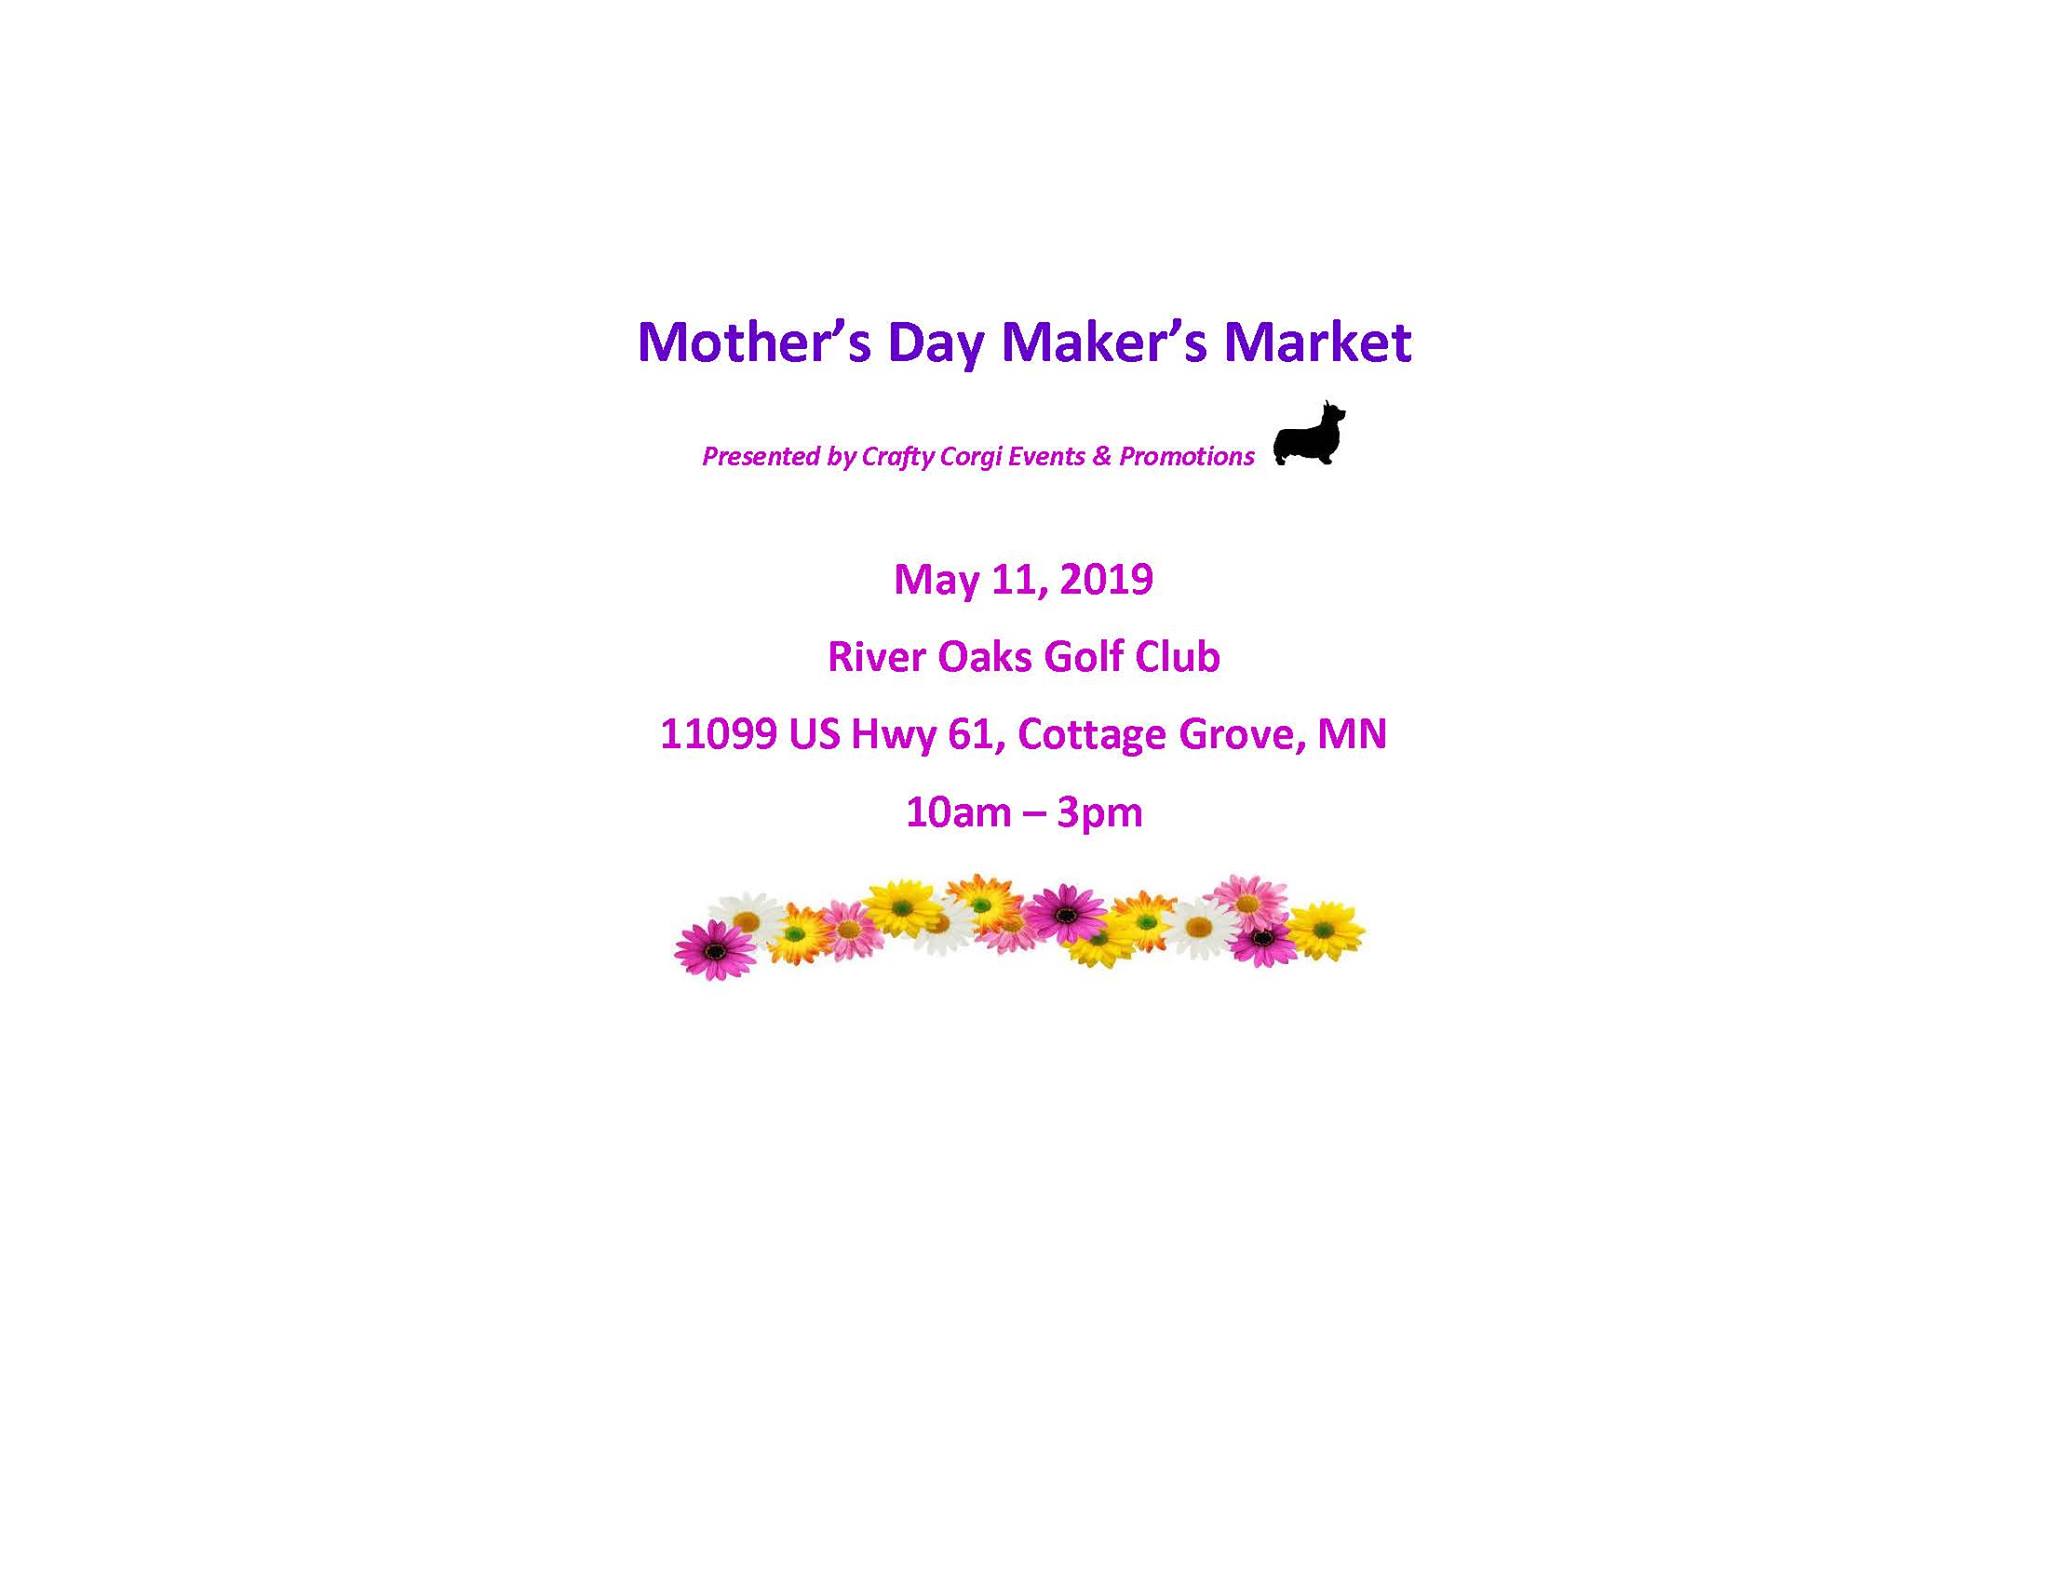 Mother's Day Maker's Market - River Oaks Golf Course - Cottage Grove